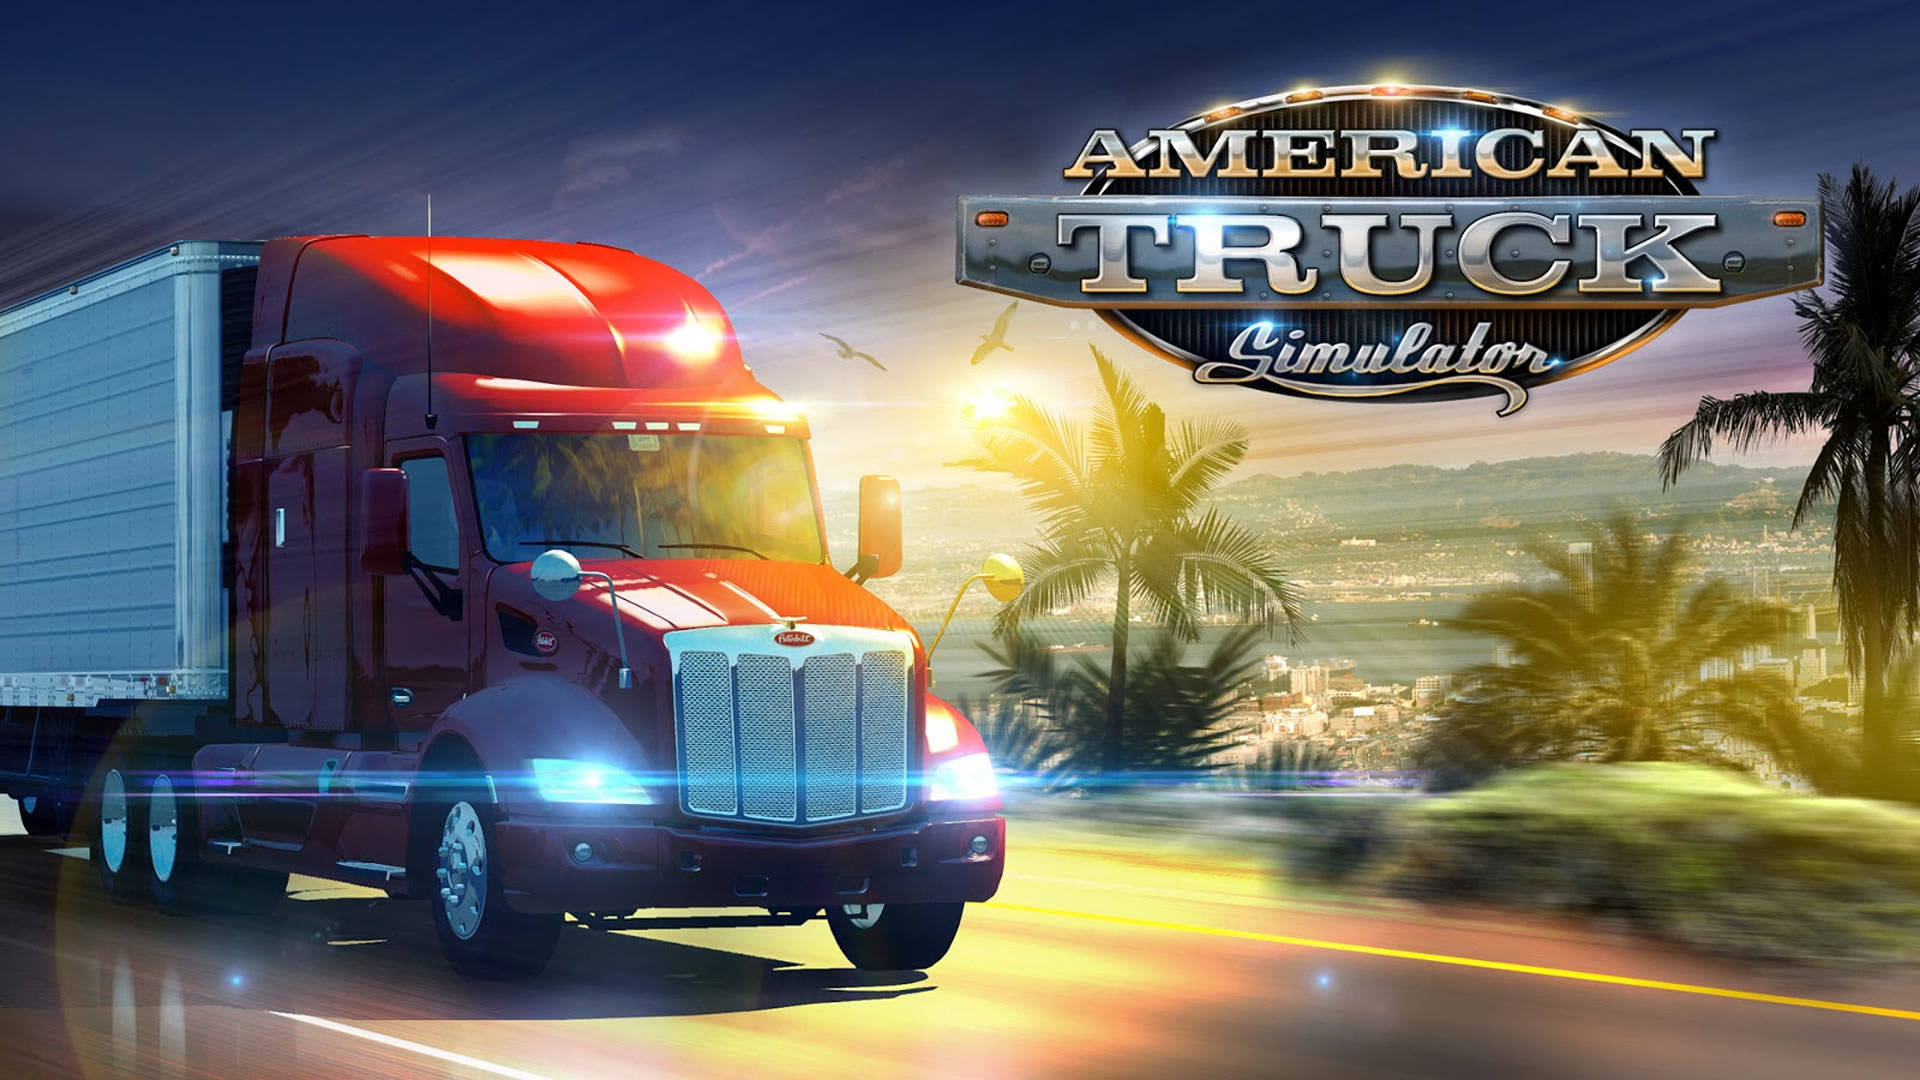 American Truck Simulator Glossy Red Truck Wallpaper